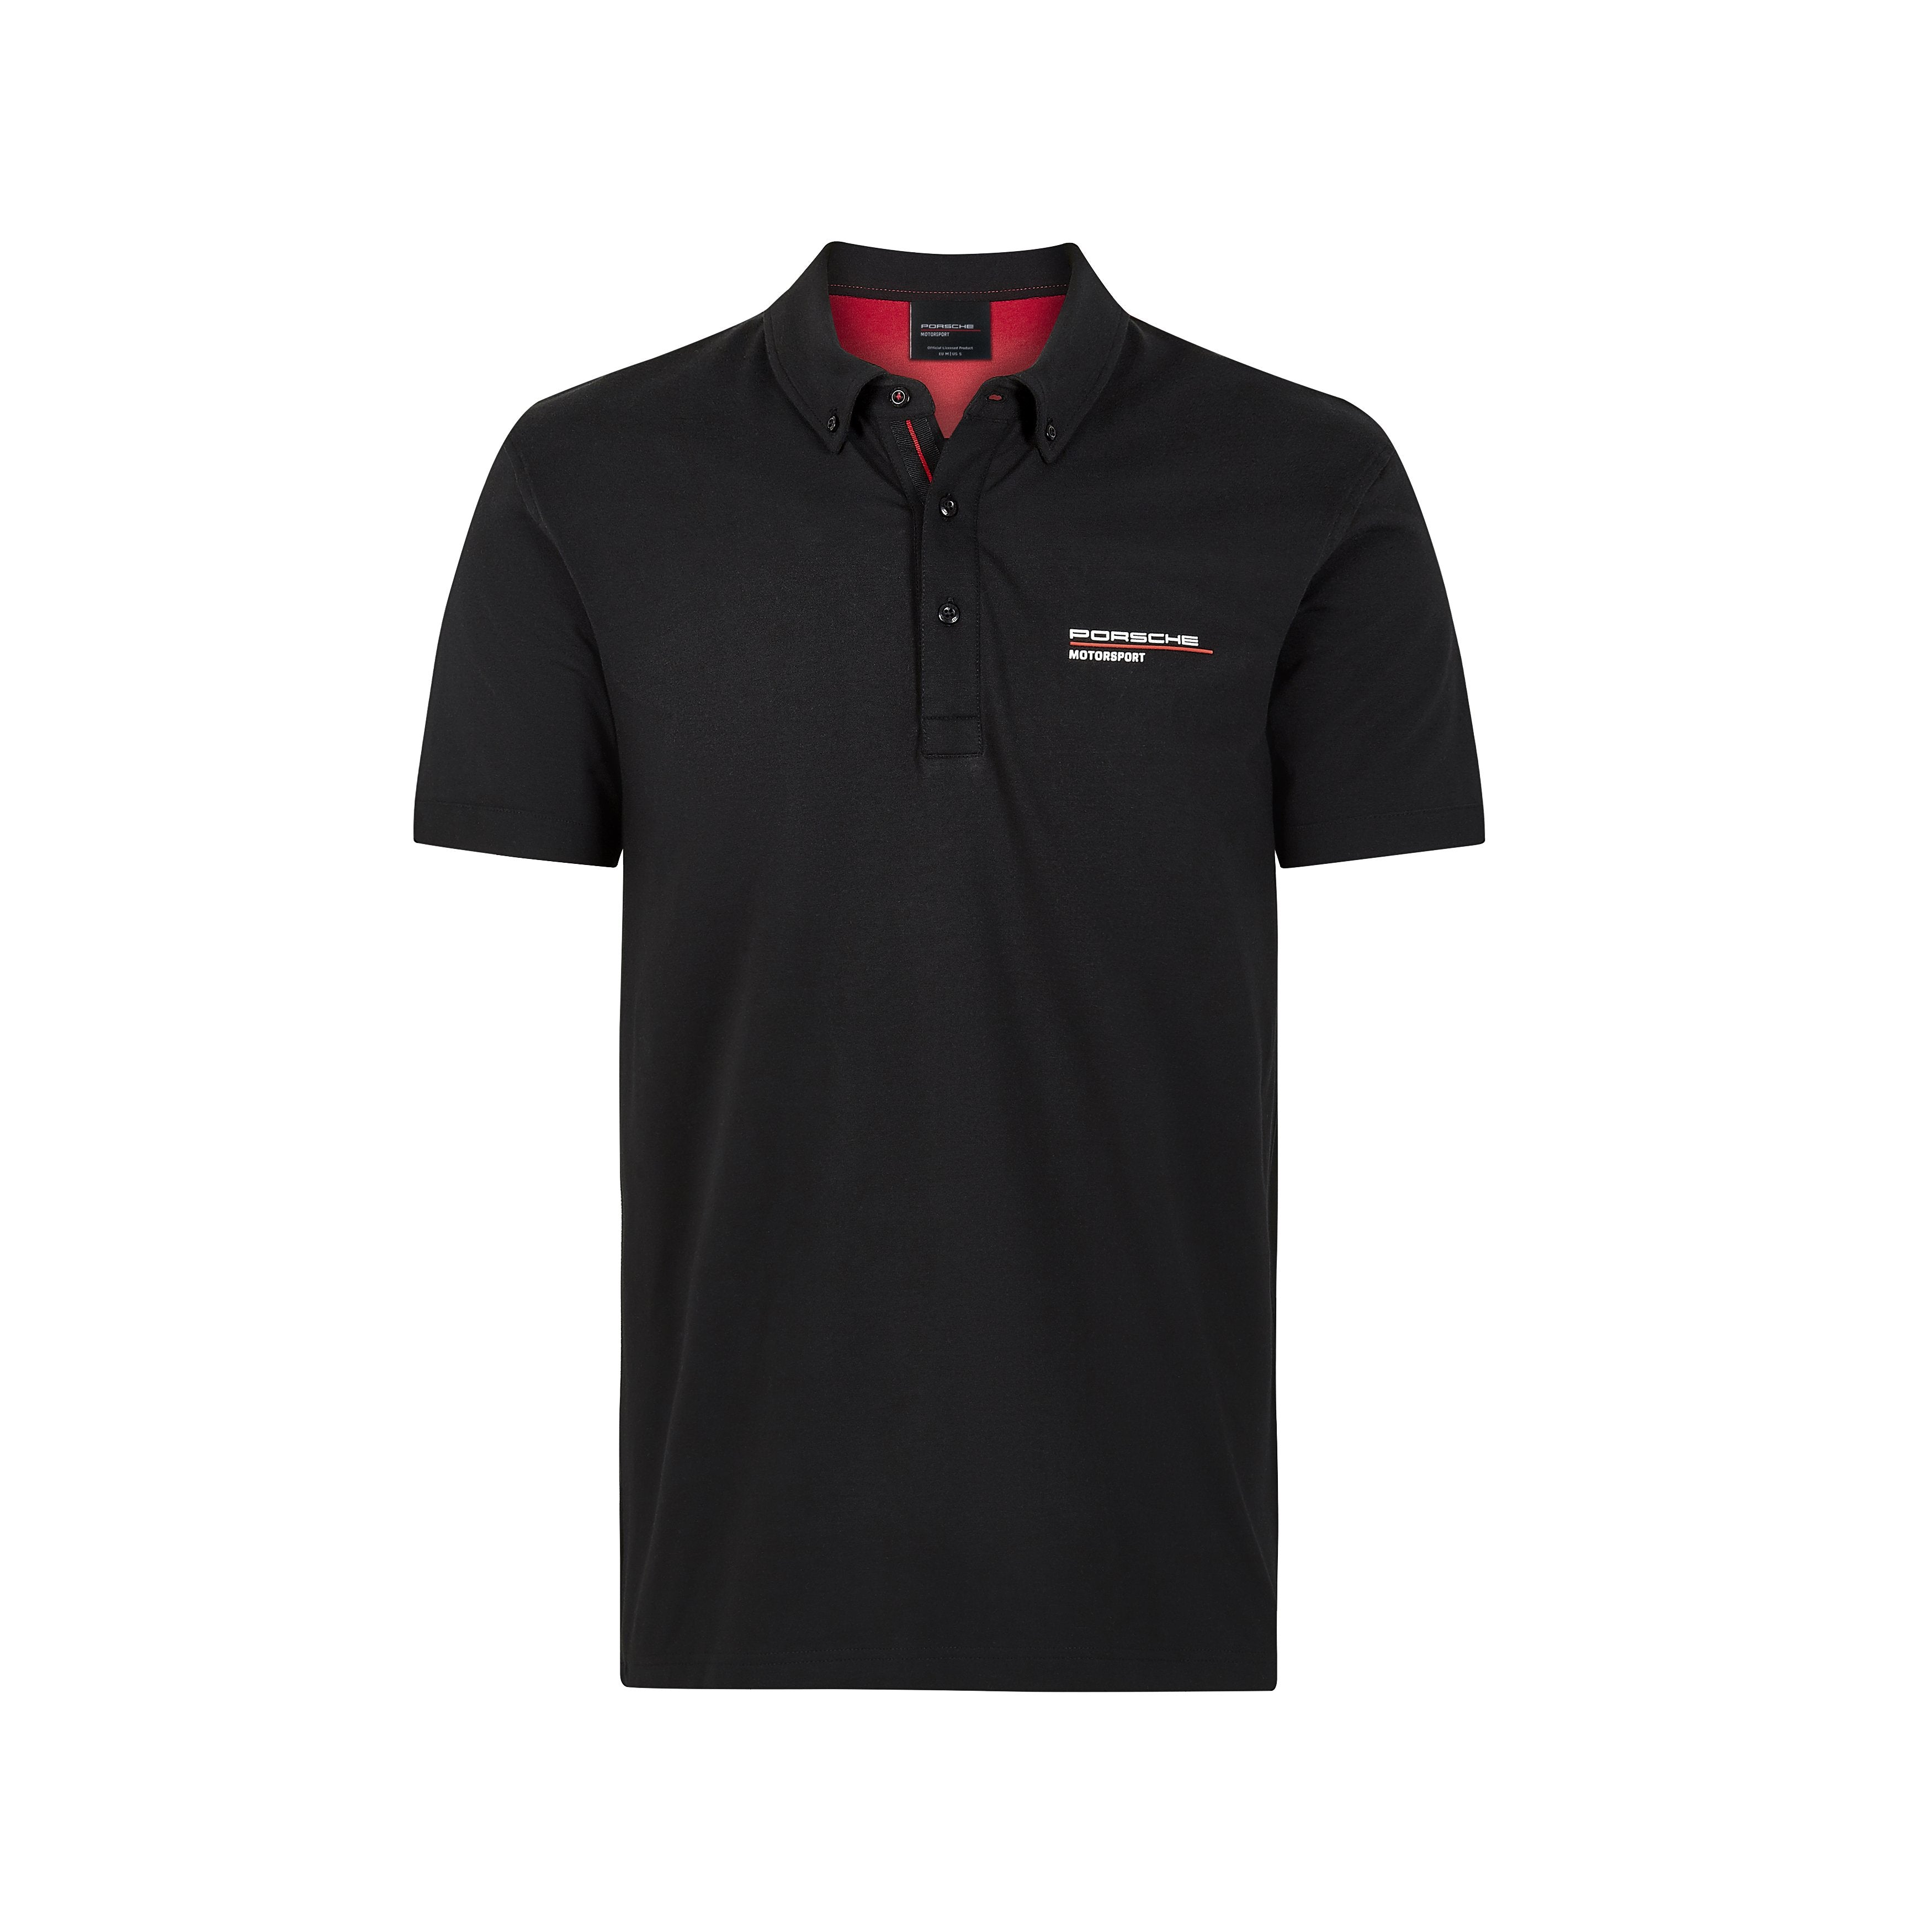 Porsche Motorsport Polo Shirt Black